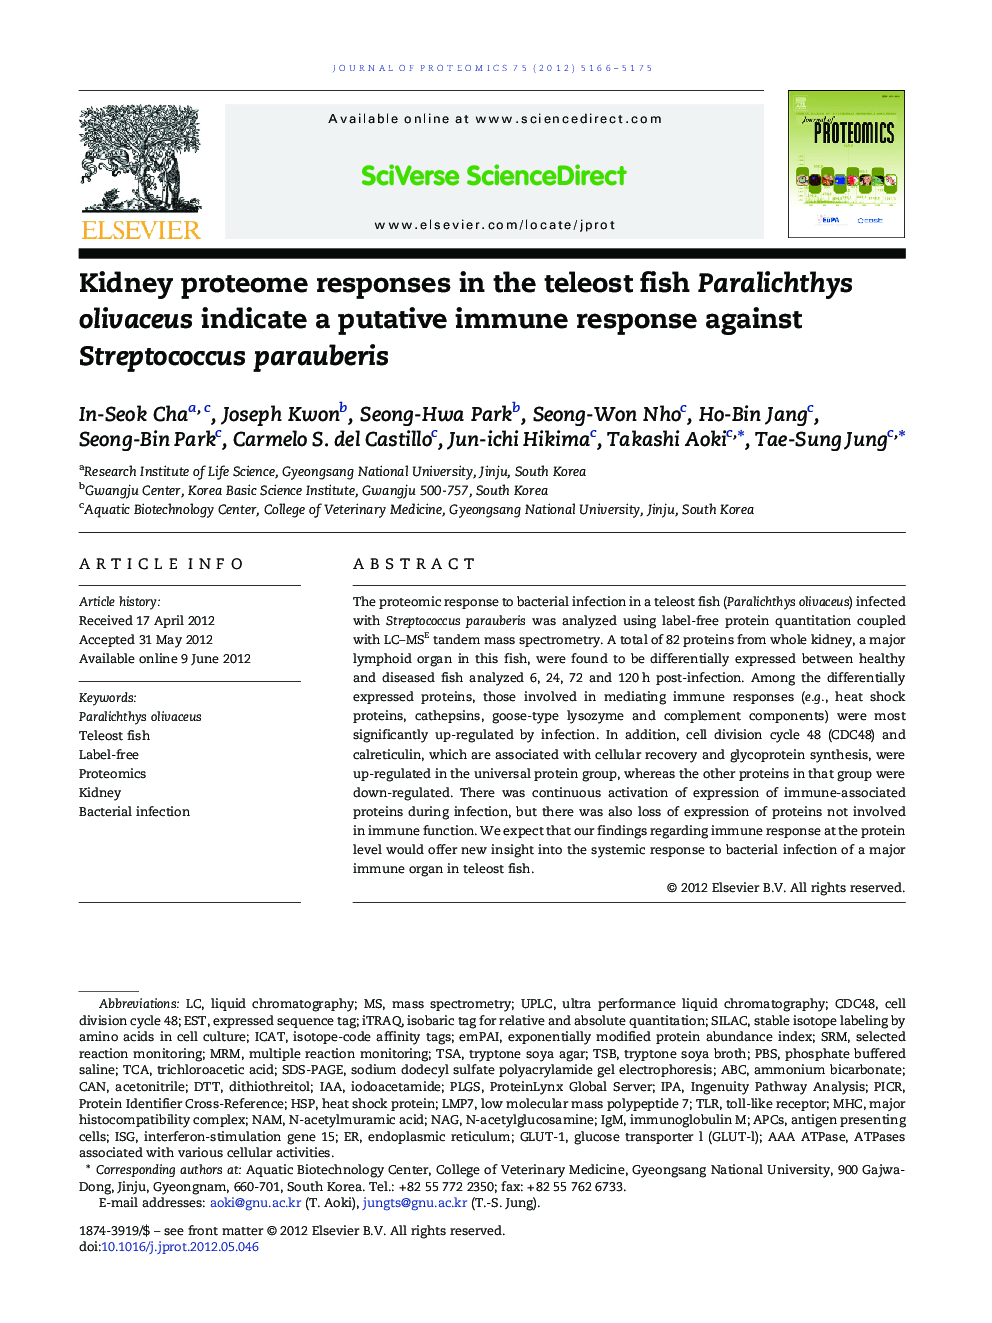 Kidney proteome responses in the teleost fish Paralichthys olivaceus indicate a putative immune response against Streptococcus parauberis